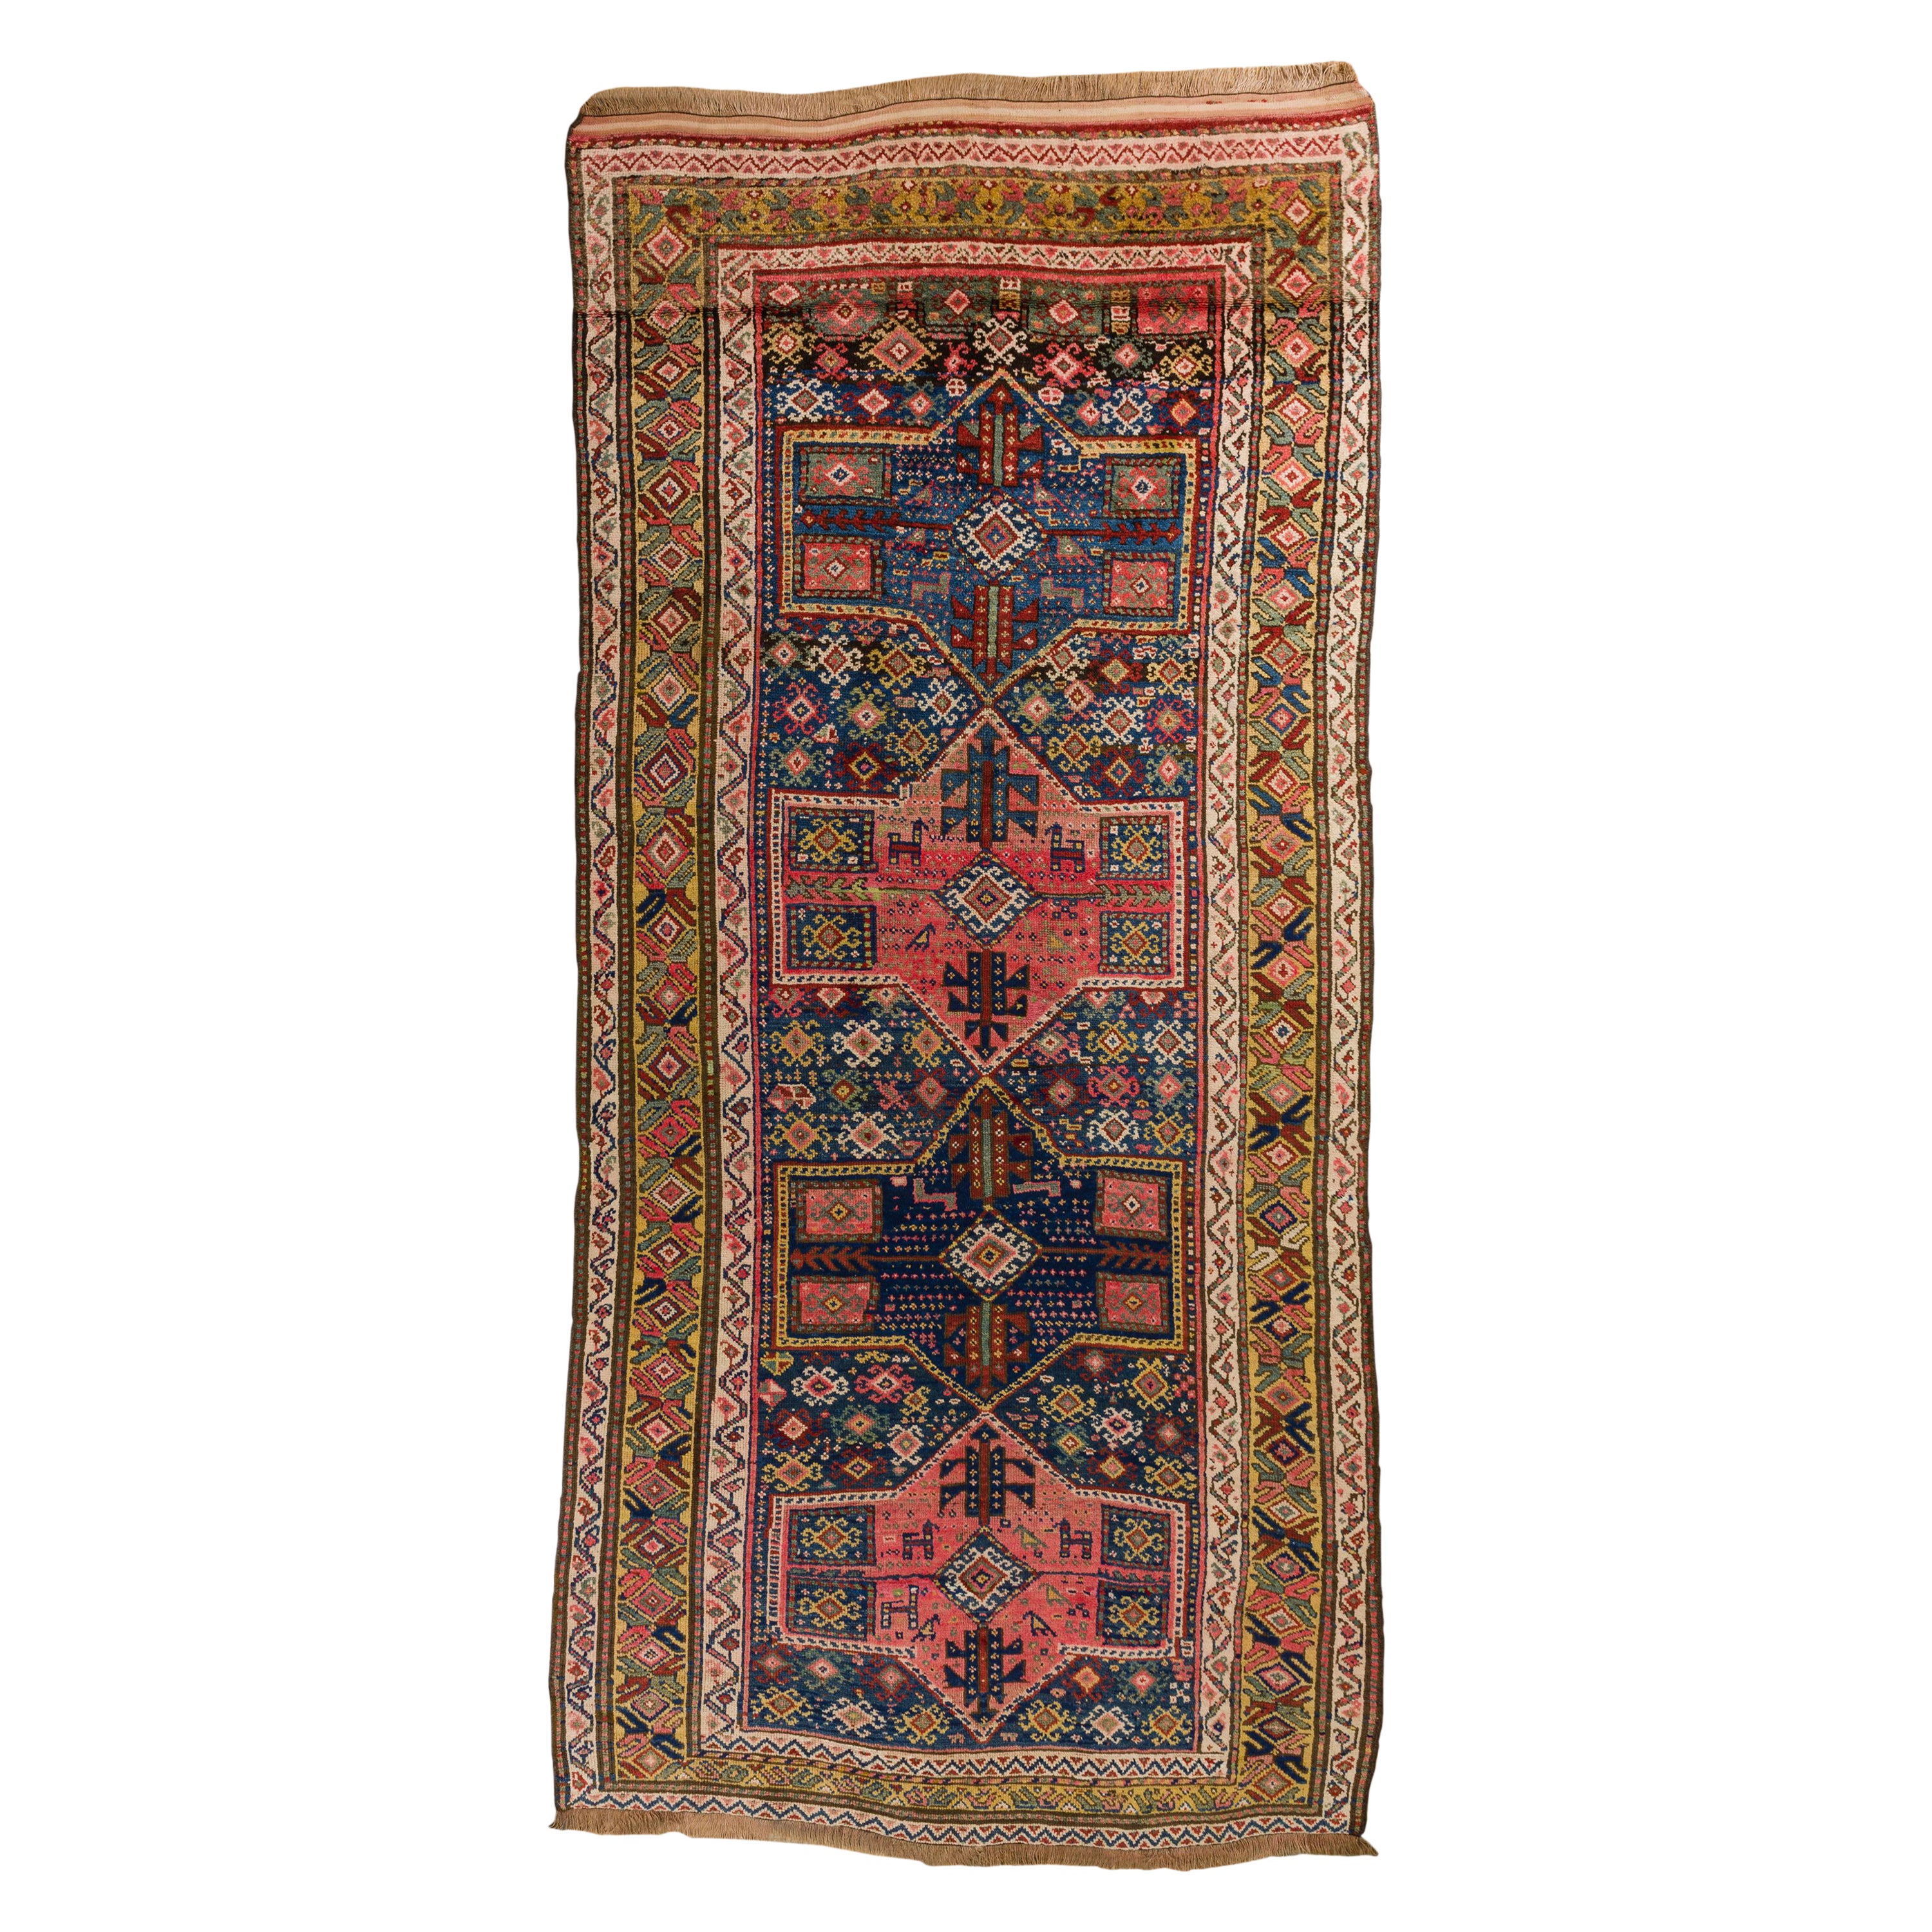 Old Kurdestan Carpet or Rug